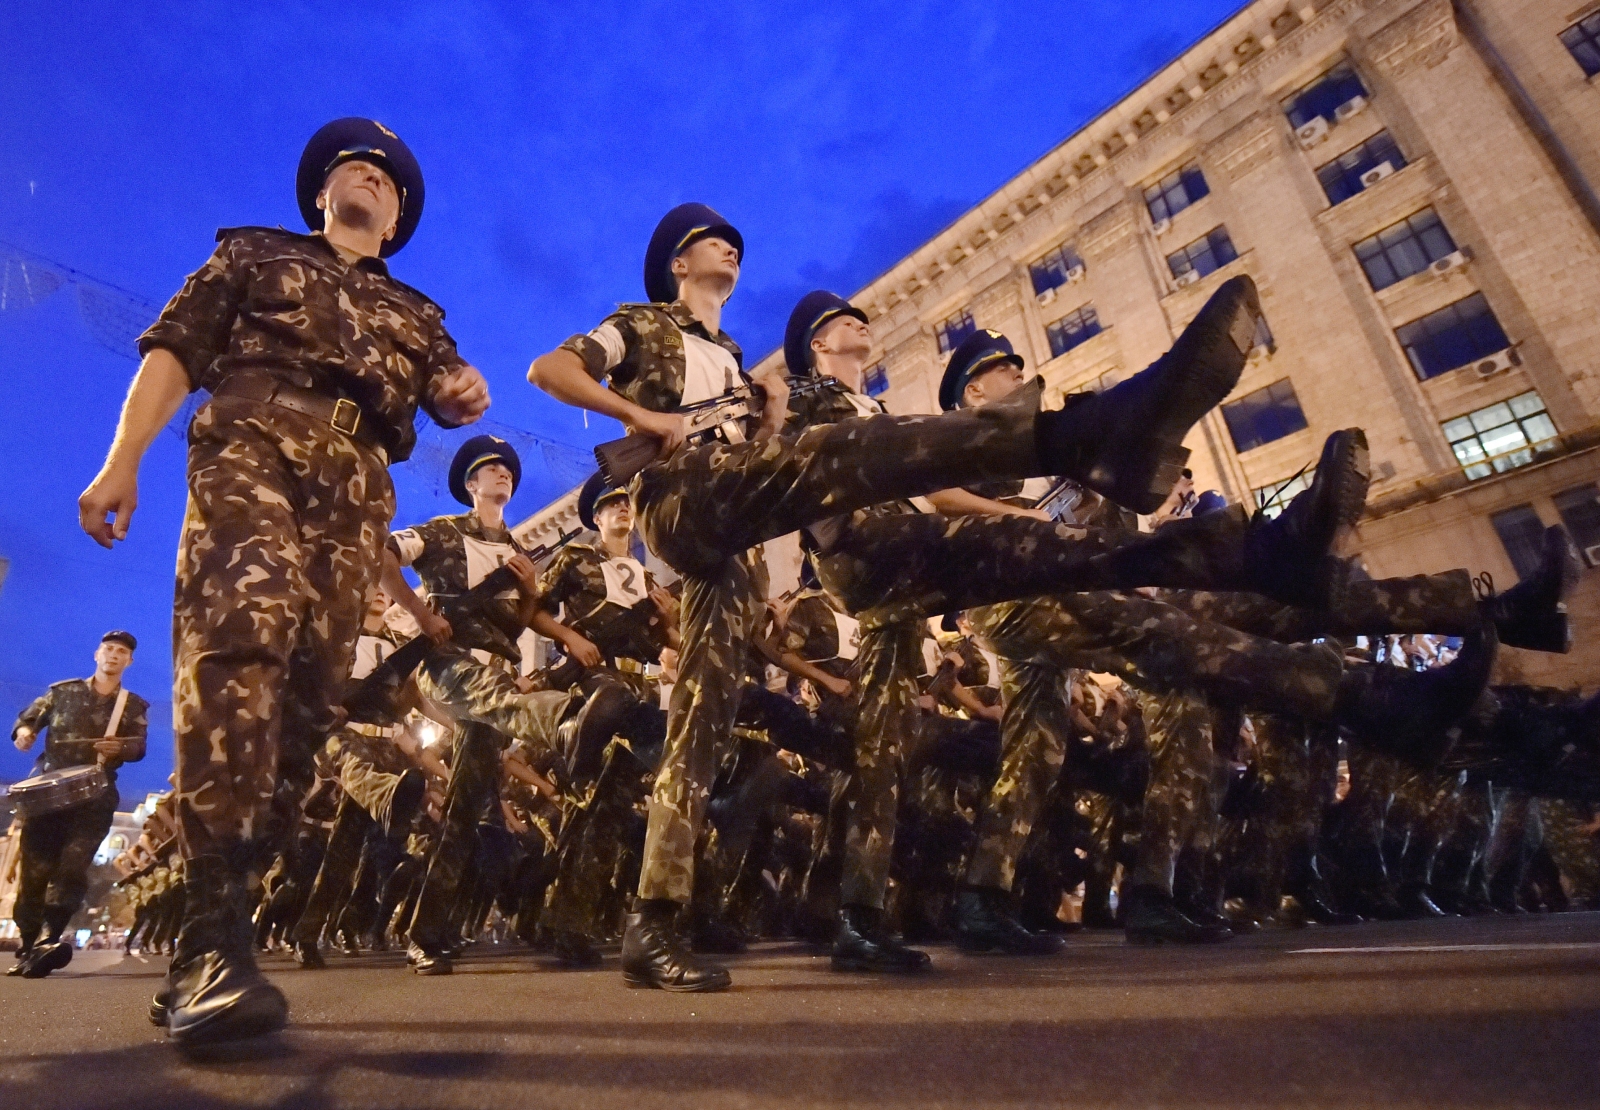 Ukraine Independence Day Parade goose steps